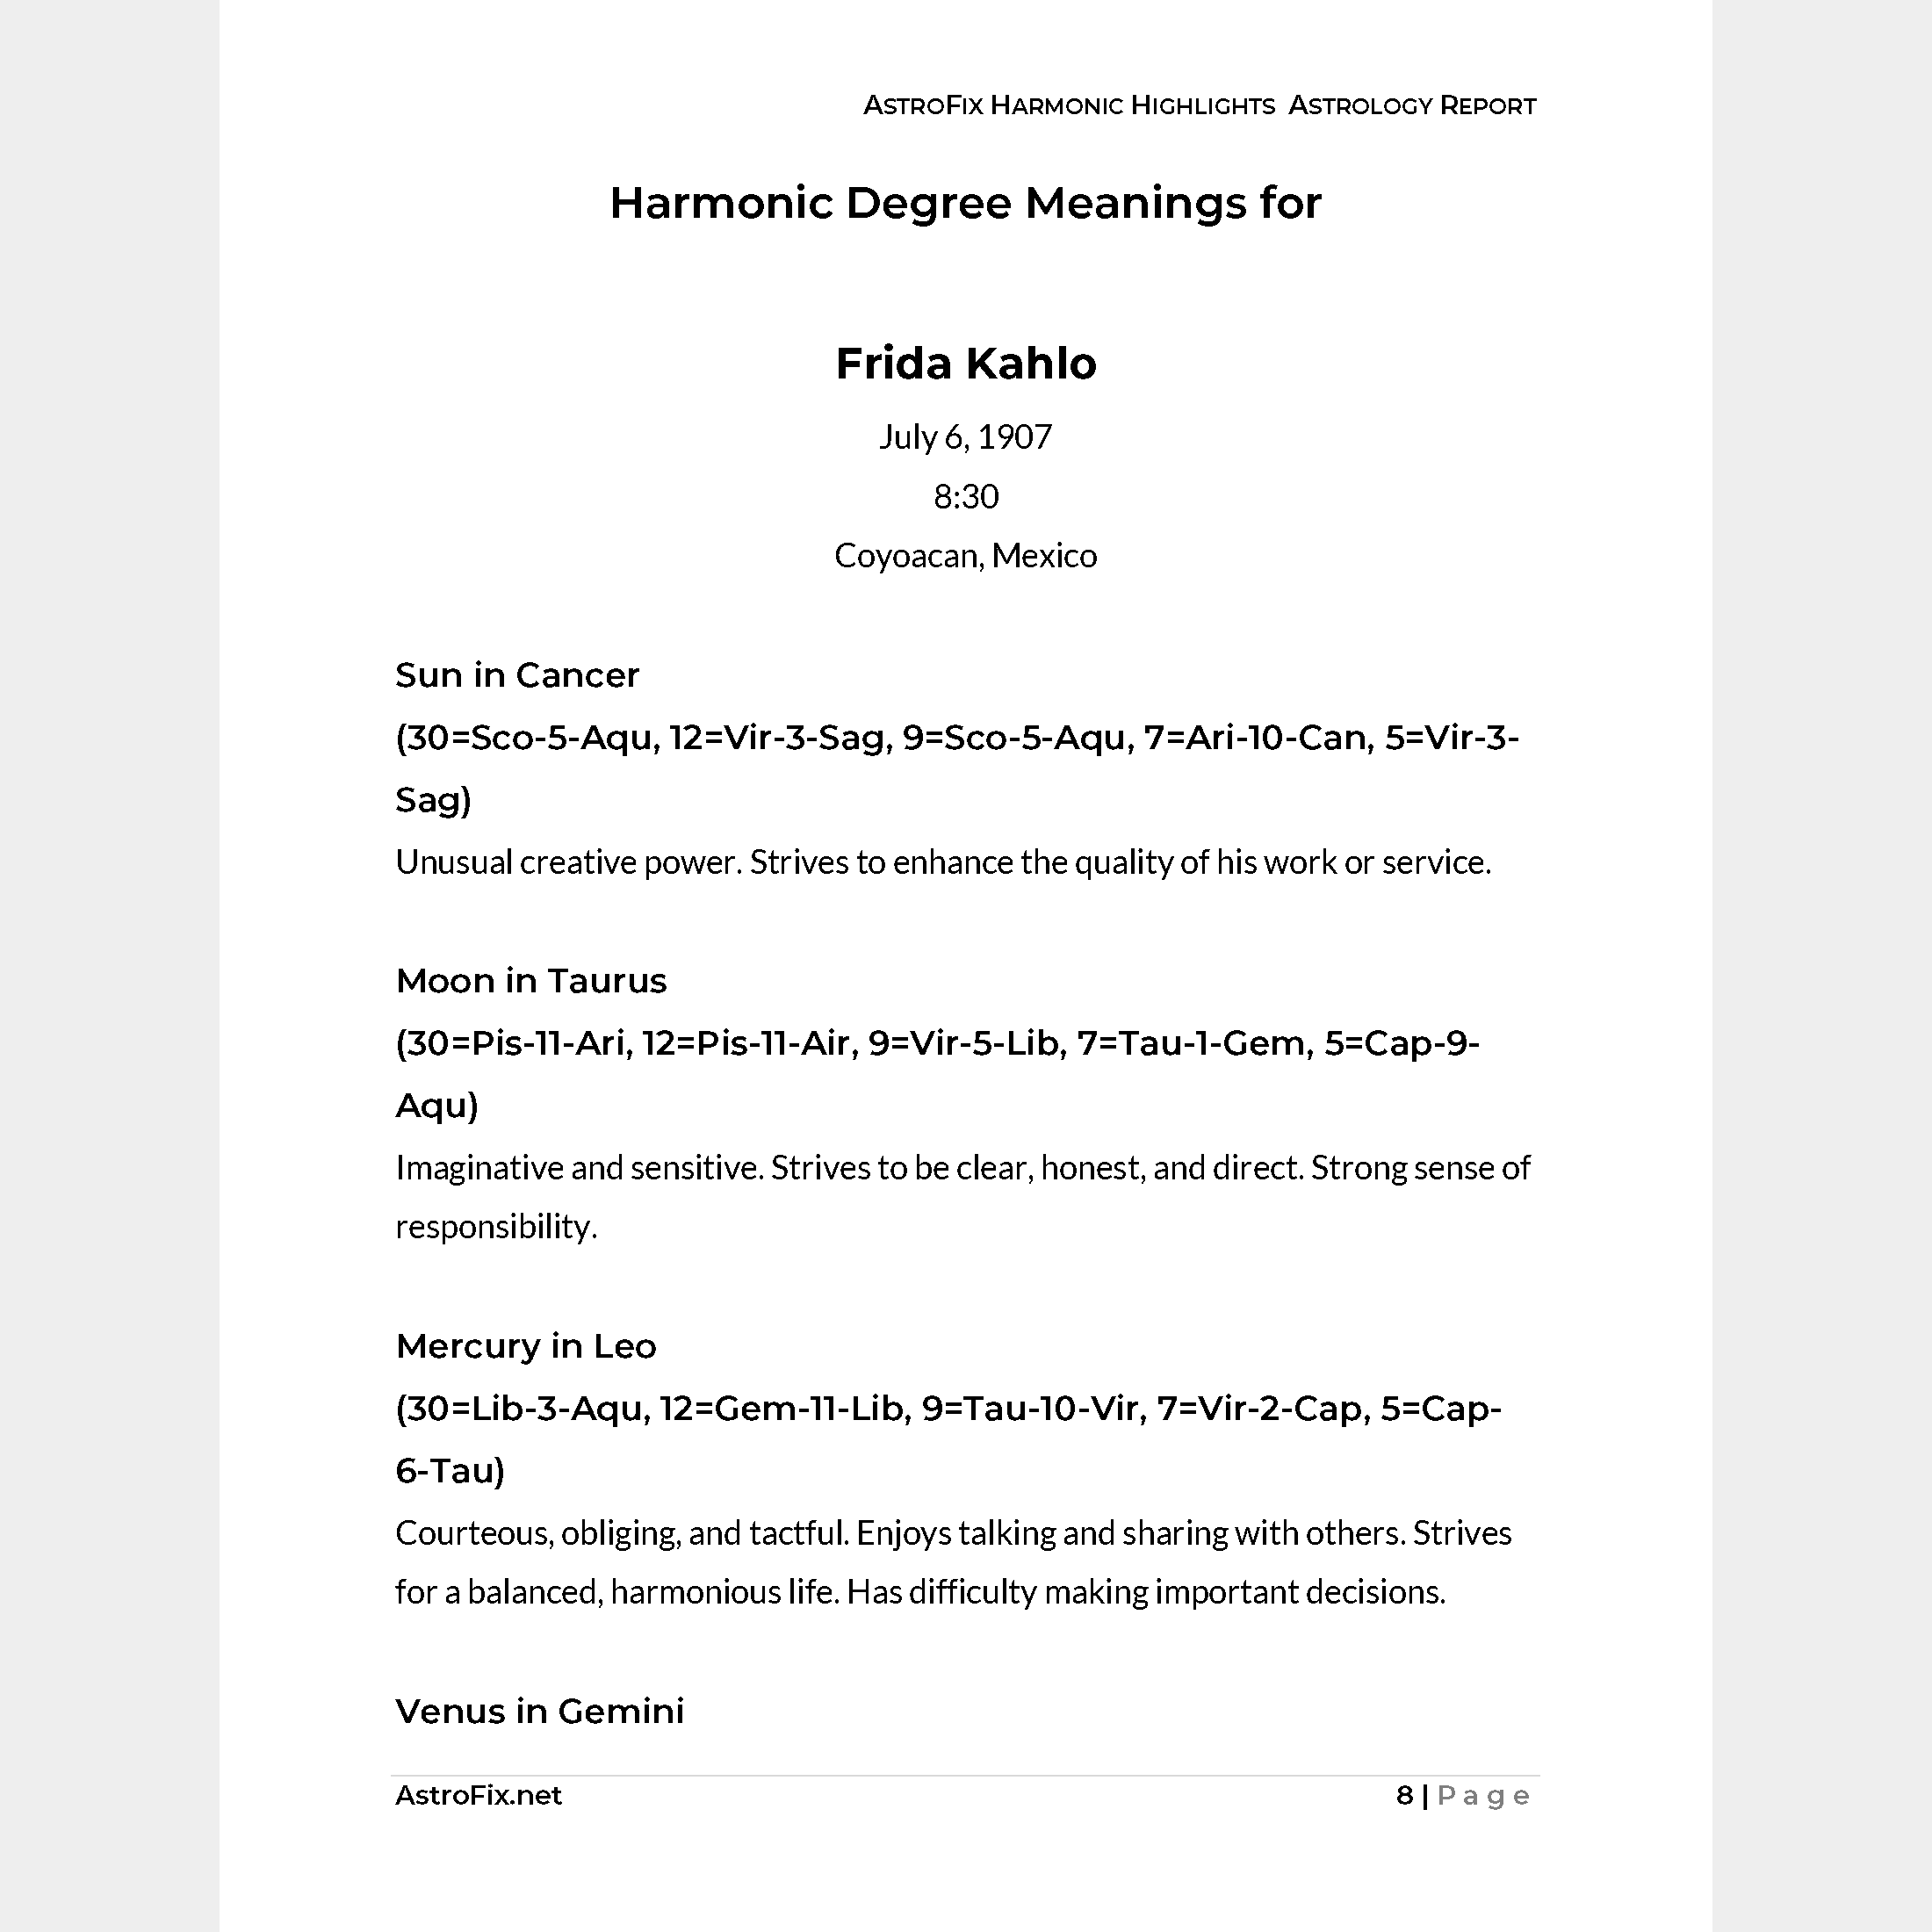 Harmonic Highlights Astrology Report